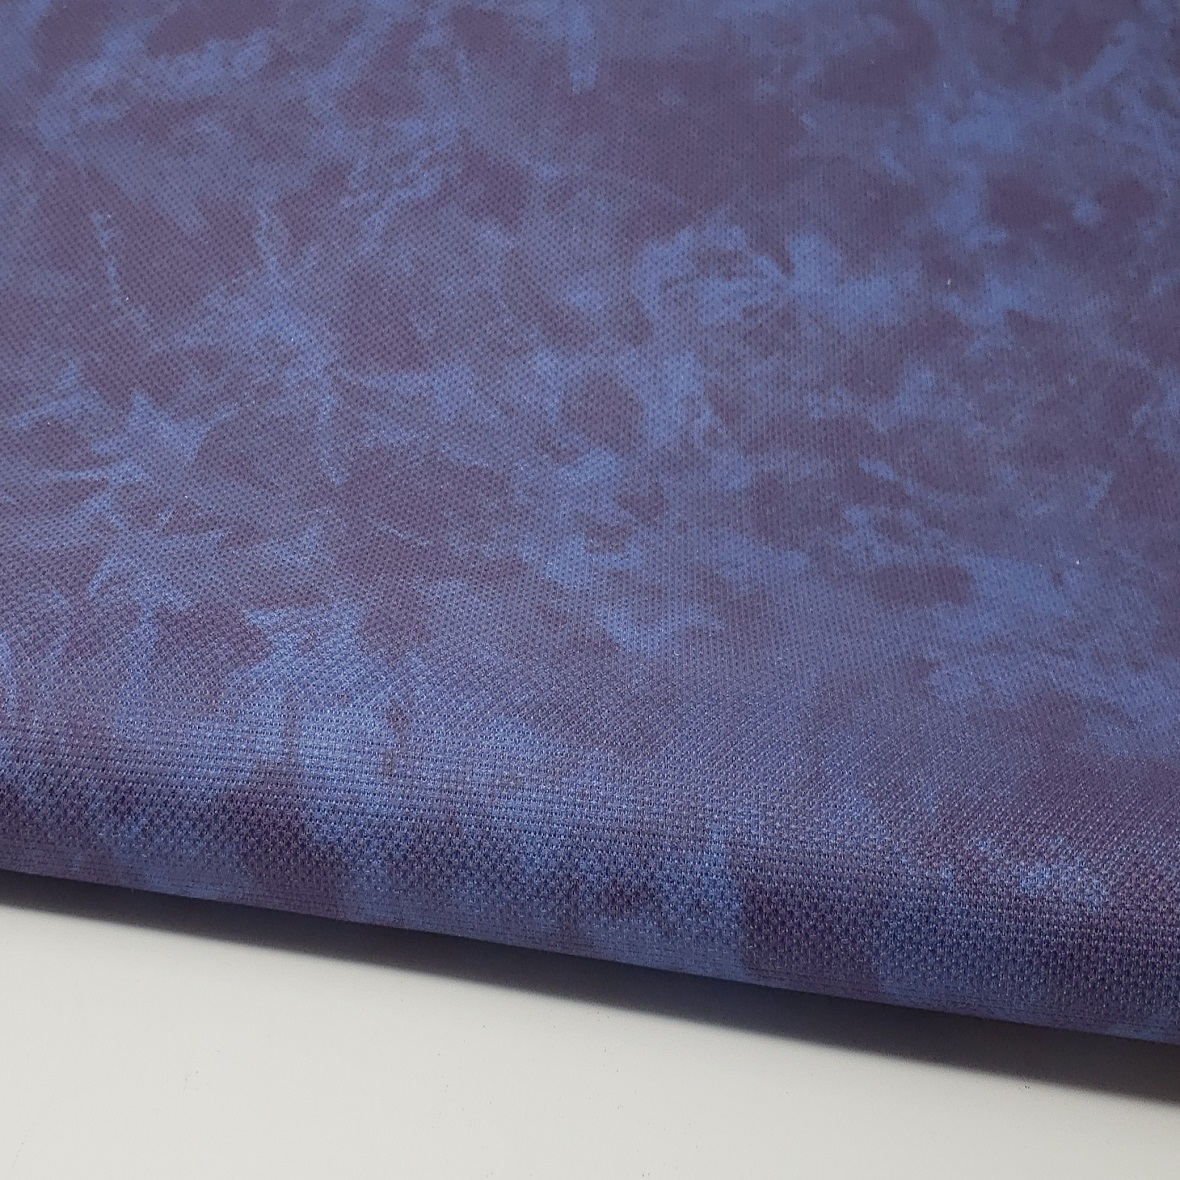  Hand-Dyed 16 Count Aida Cloth, Cross-Stitch Fabric - 17 x 19  - Navy Blue